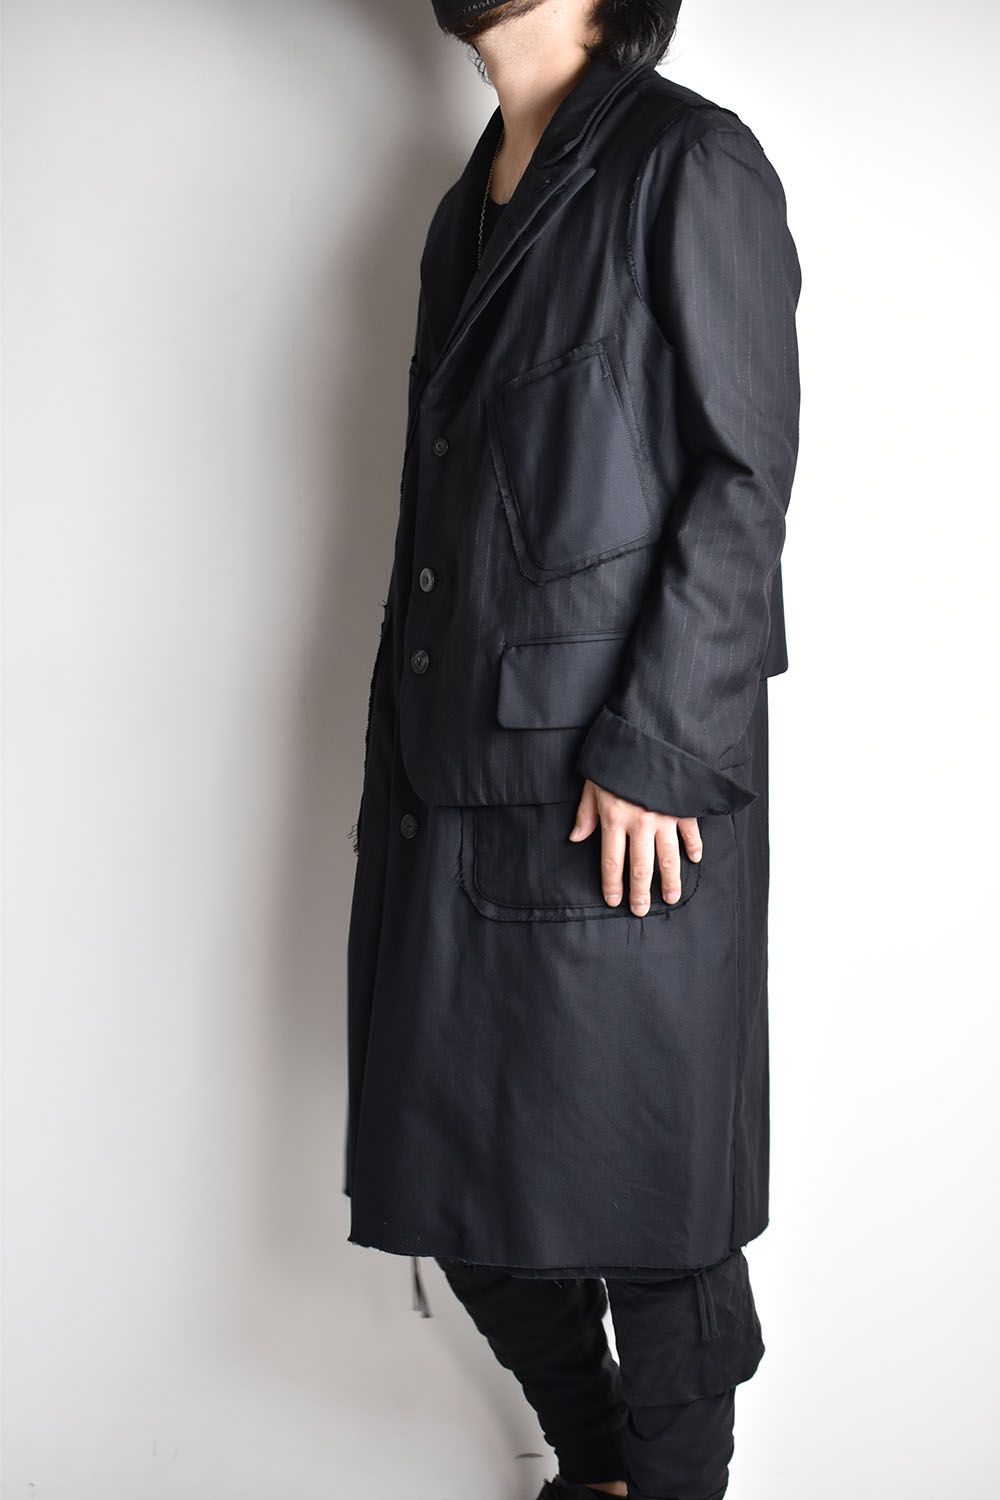 nude:masahiko maruyama - Patched Long Jacket W Half Vest